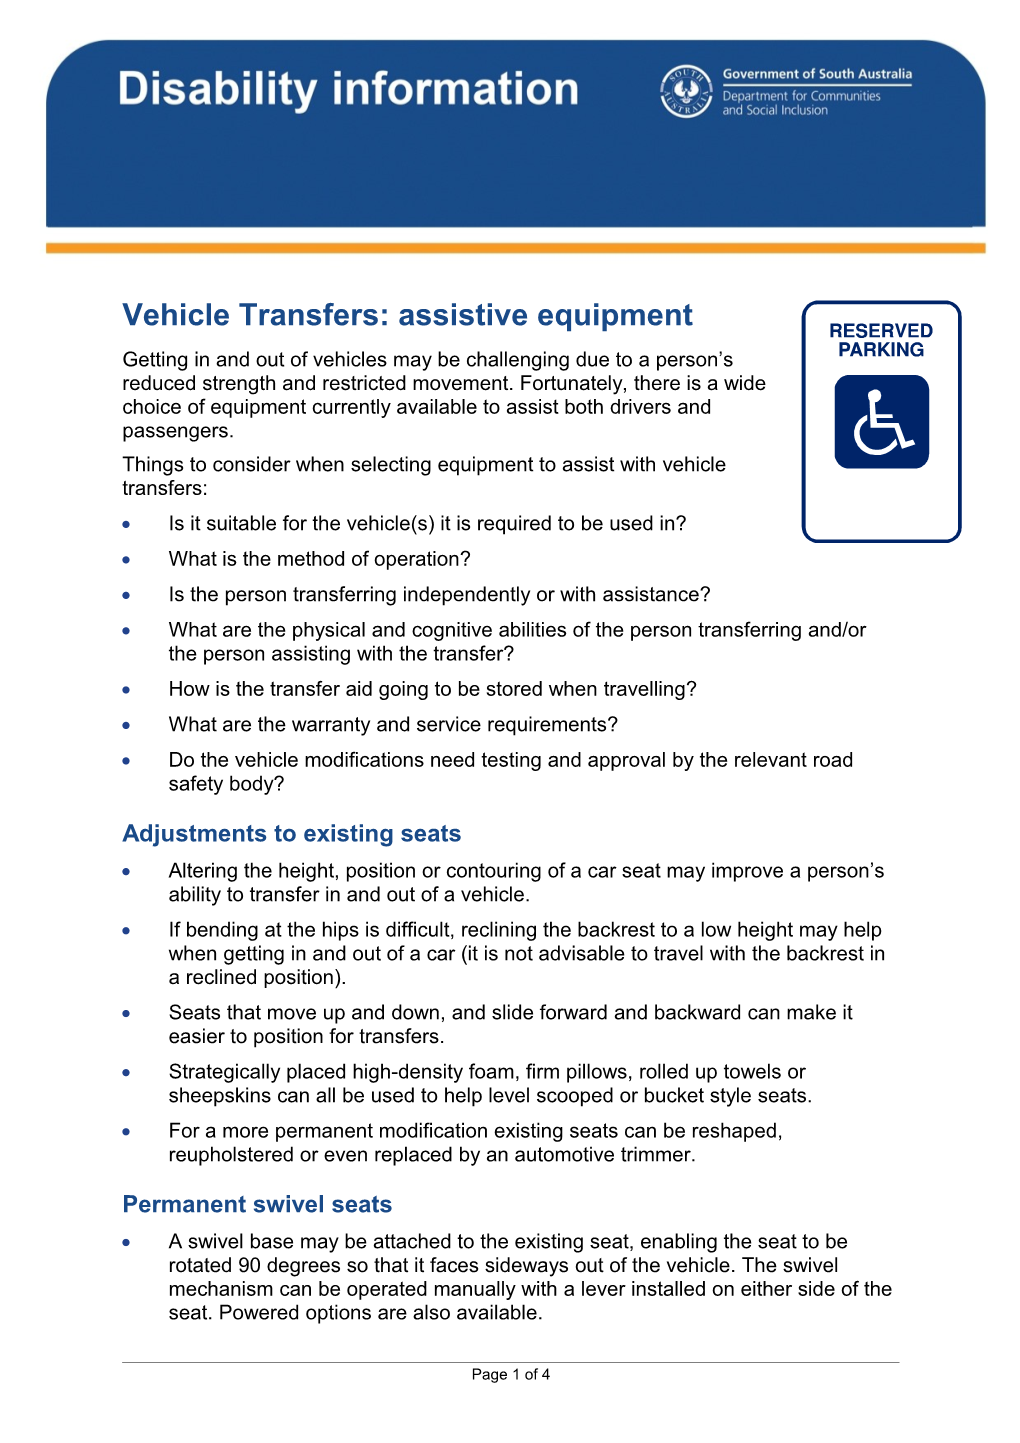 Vehicle Transfers: Assistive Equipment